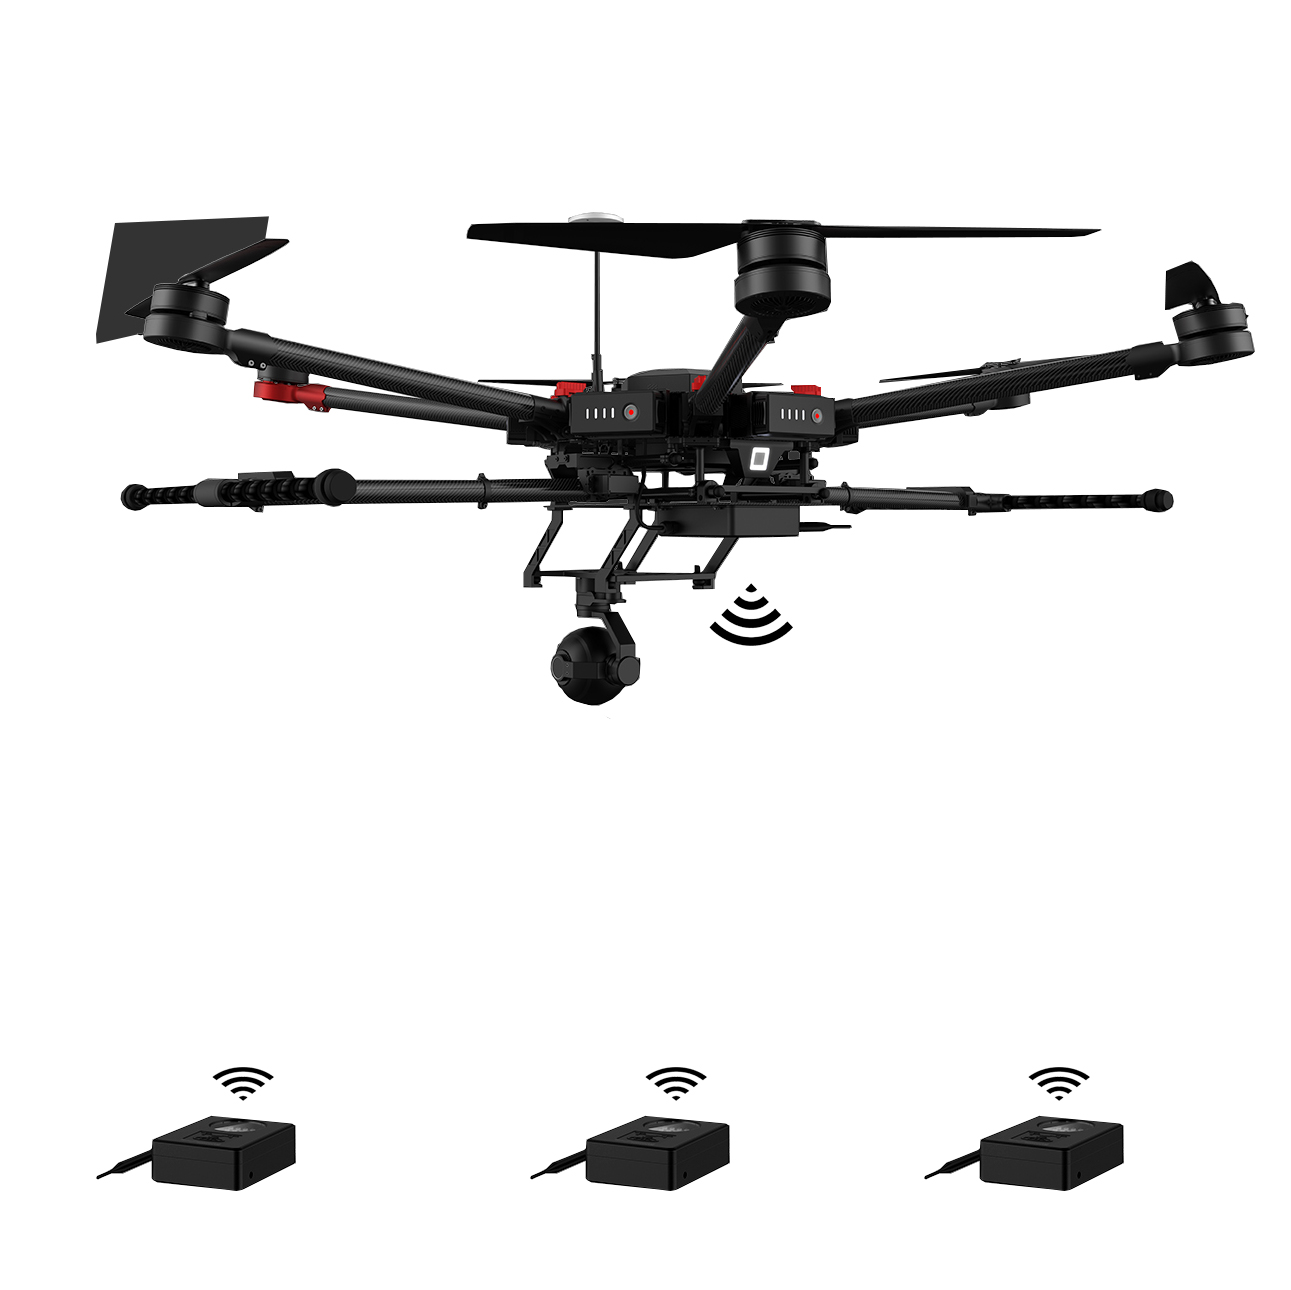 Precision Landing System drone point landing on moving platform